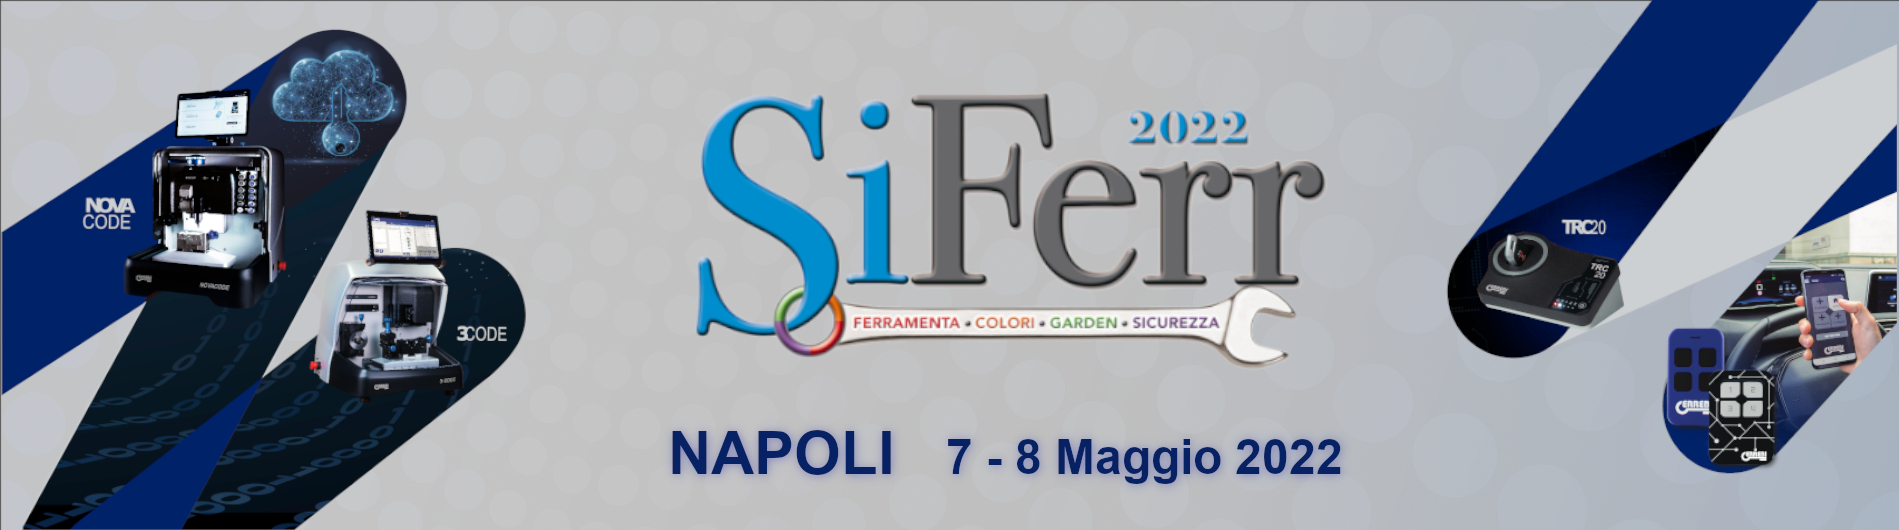 SiFerr Fair - (Naples 7-8 May 2022)